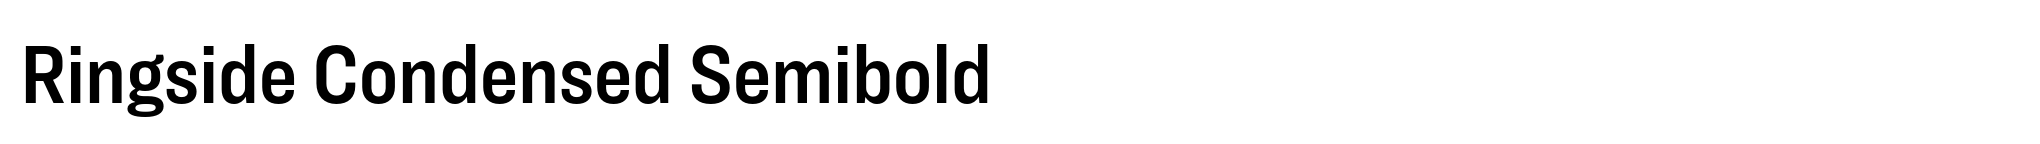 Ringside Condensed Semibold image